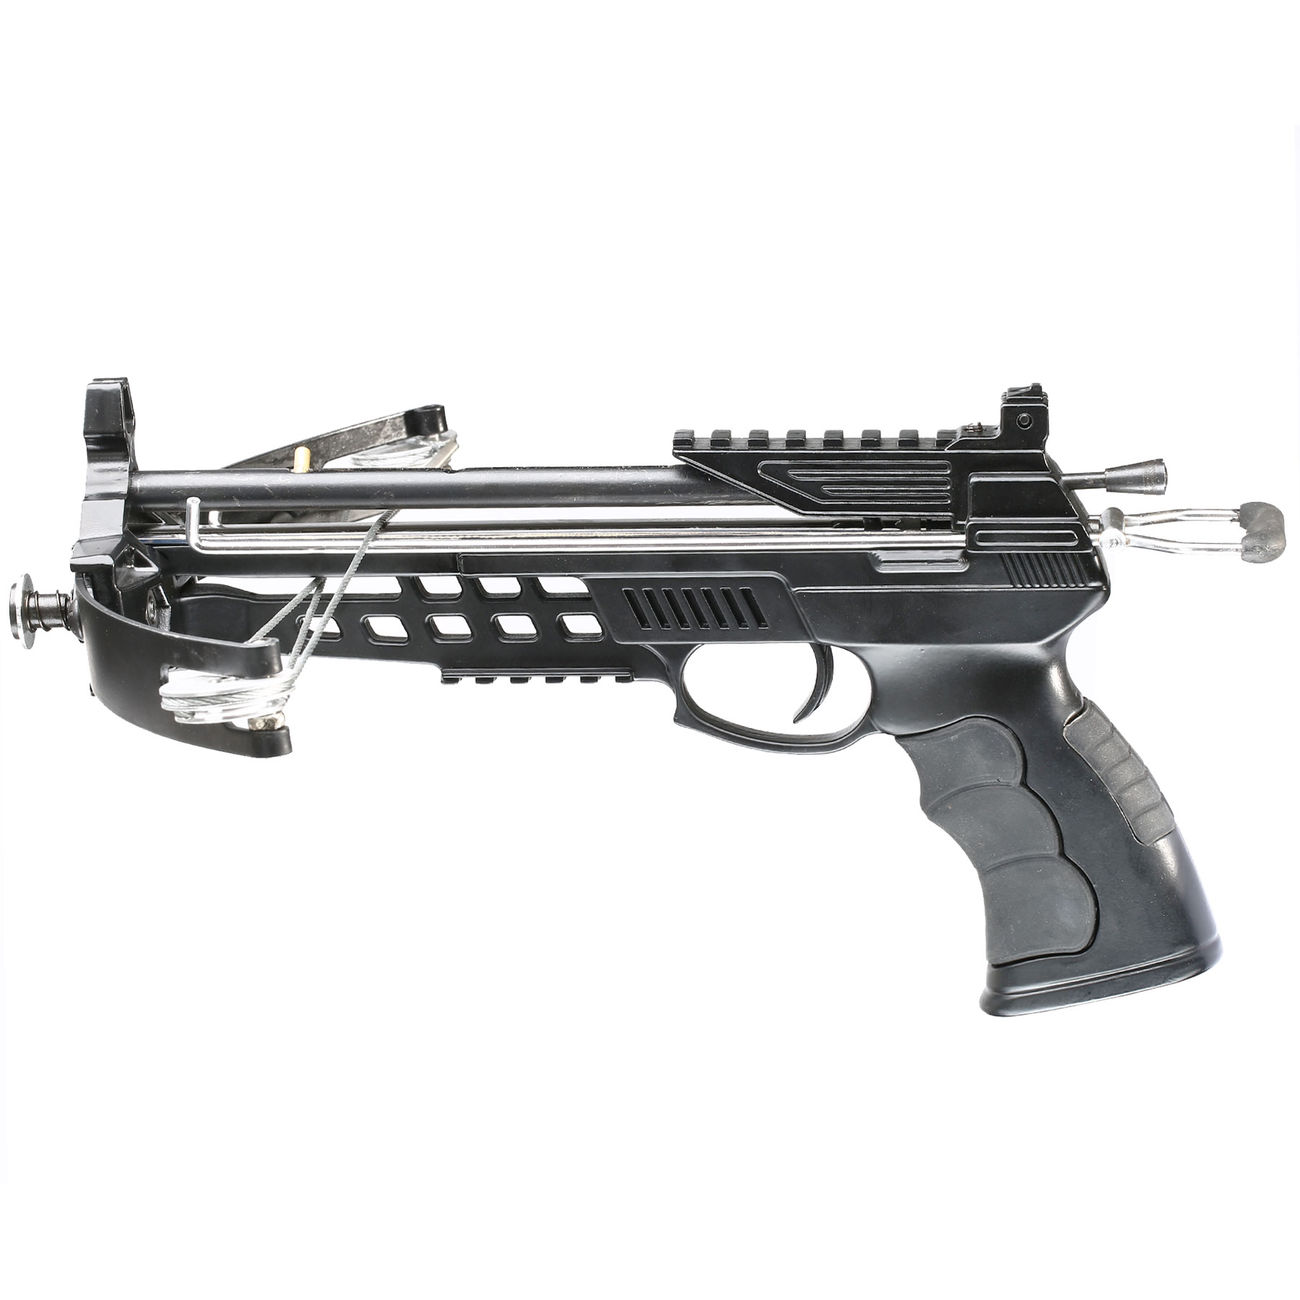 Pistolenarmbrust Cheetah 3A 28 lbs mit Kugelmagazin schwarz inkl. Kugeln, Bolzen und Schnurrollen Bild 1